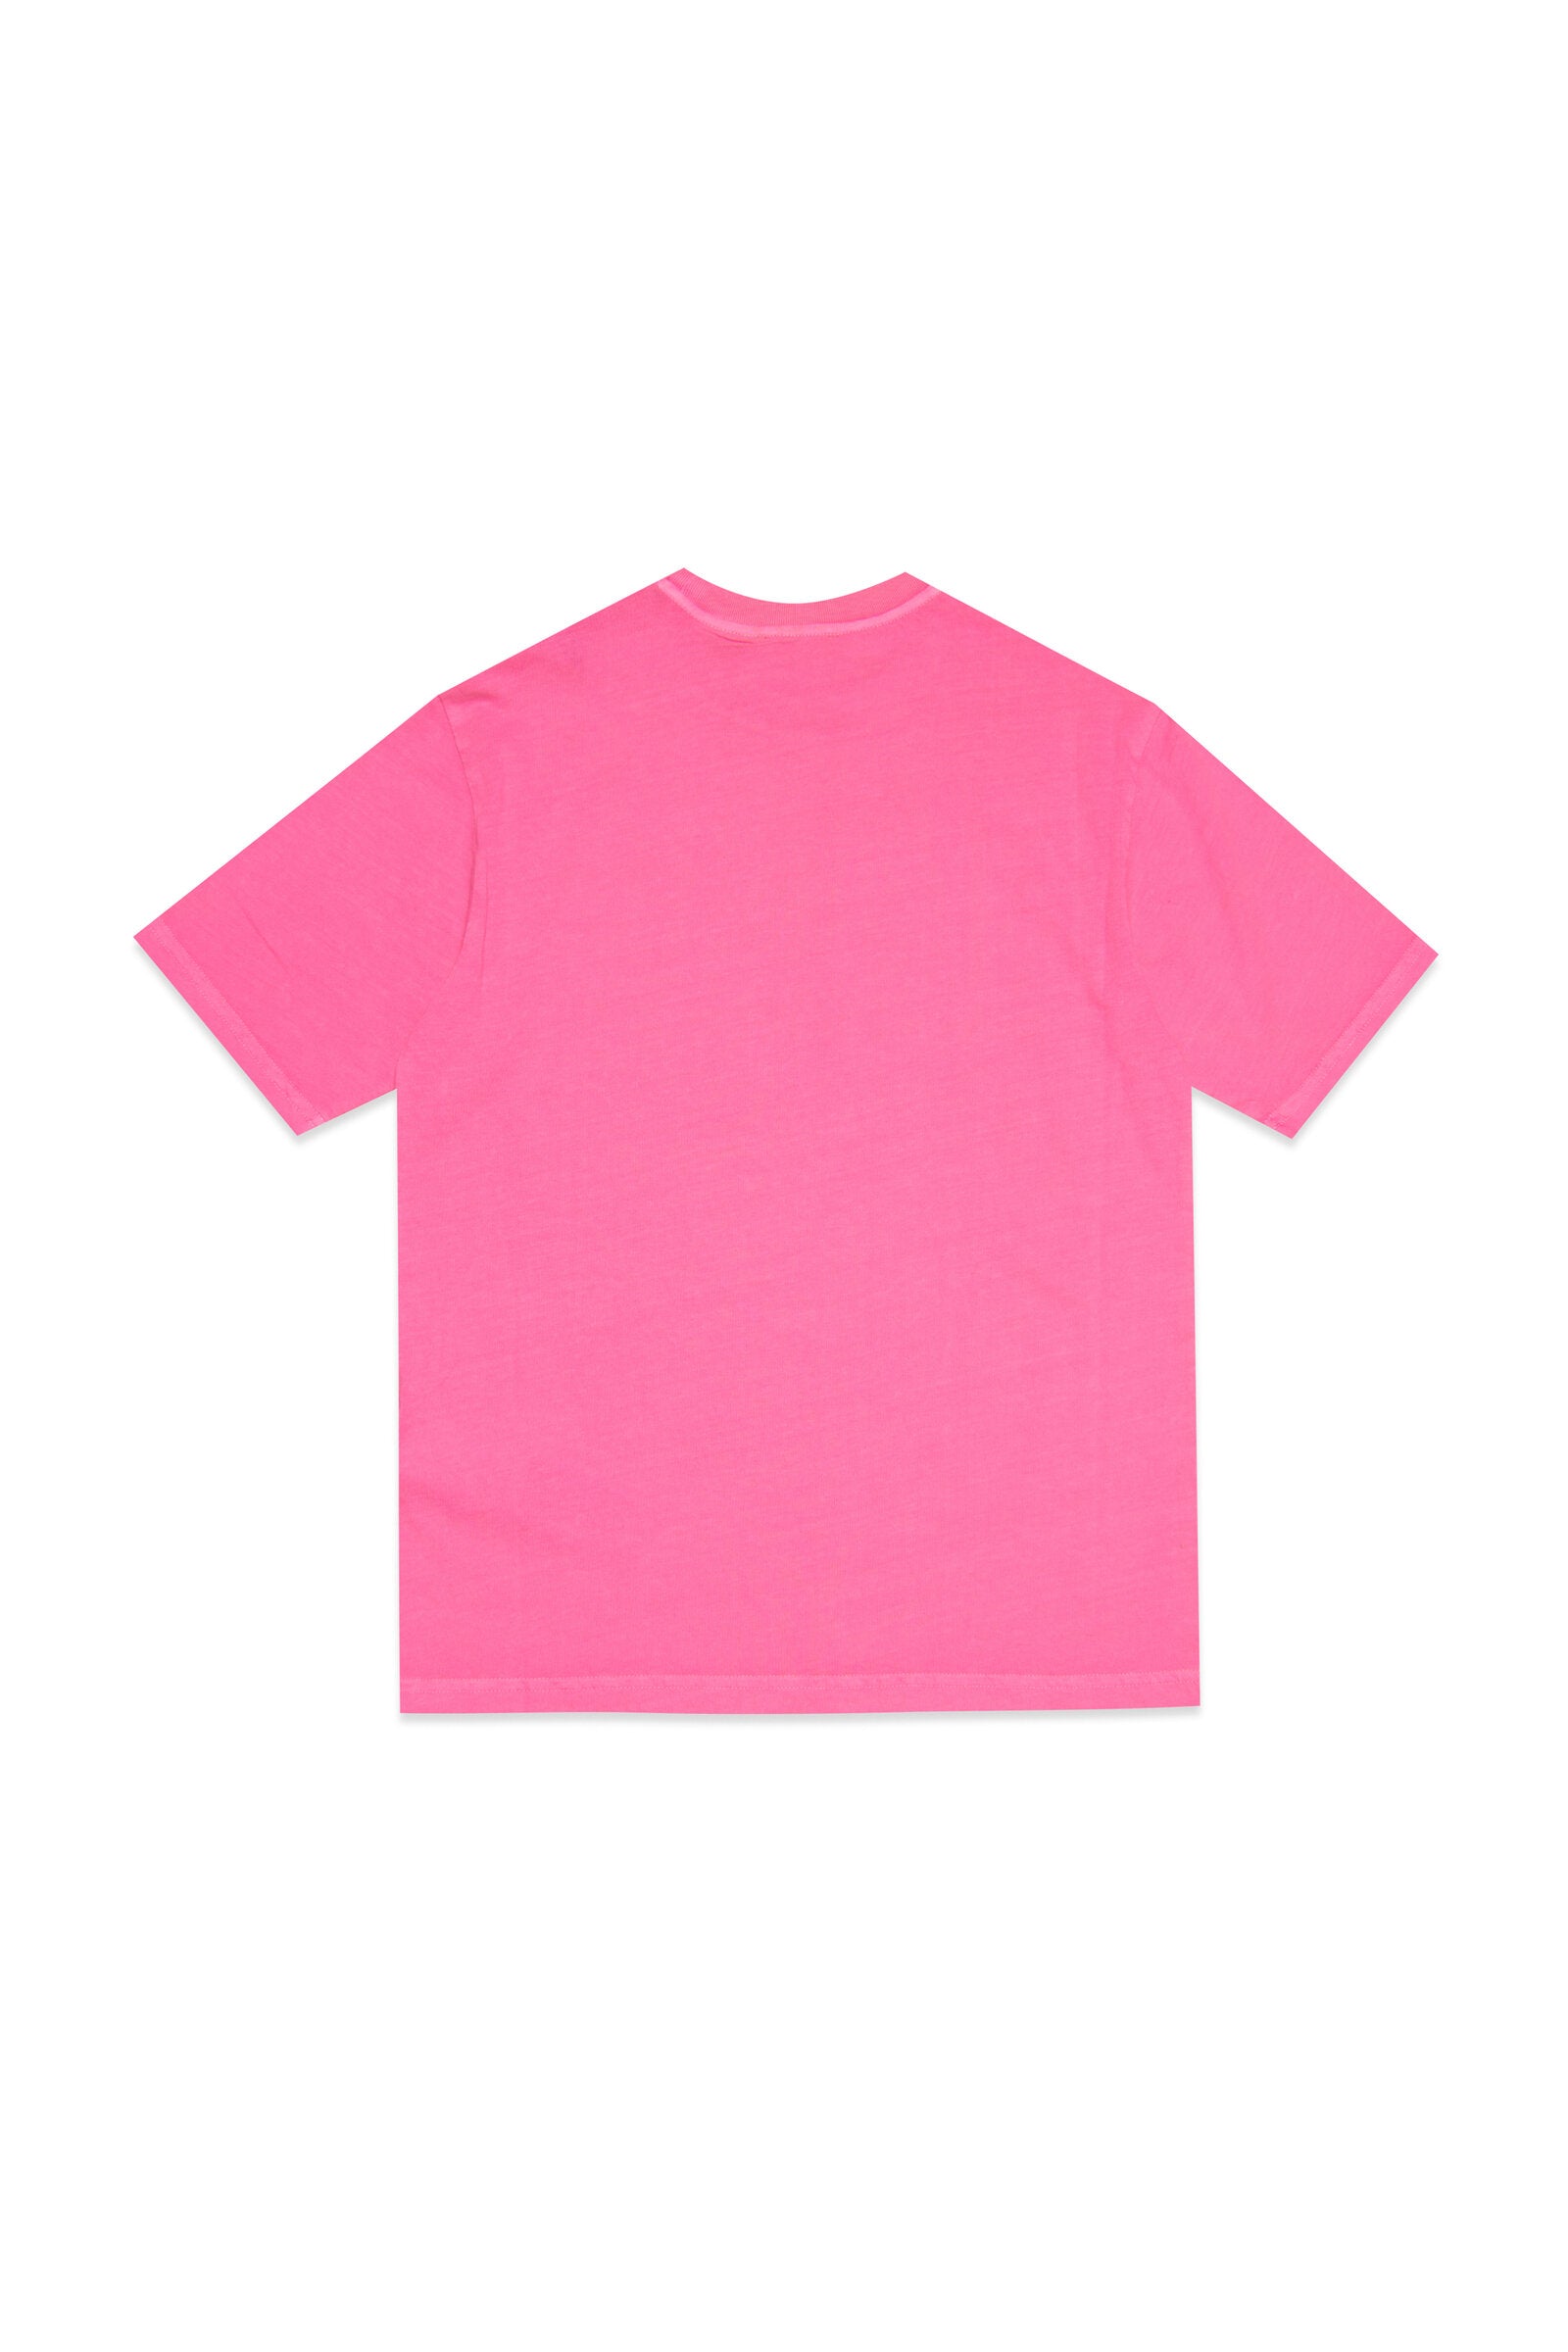 Fluorescent pink jersey T-shirt with logo